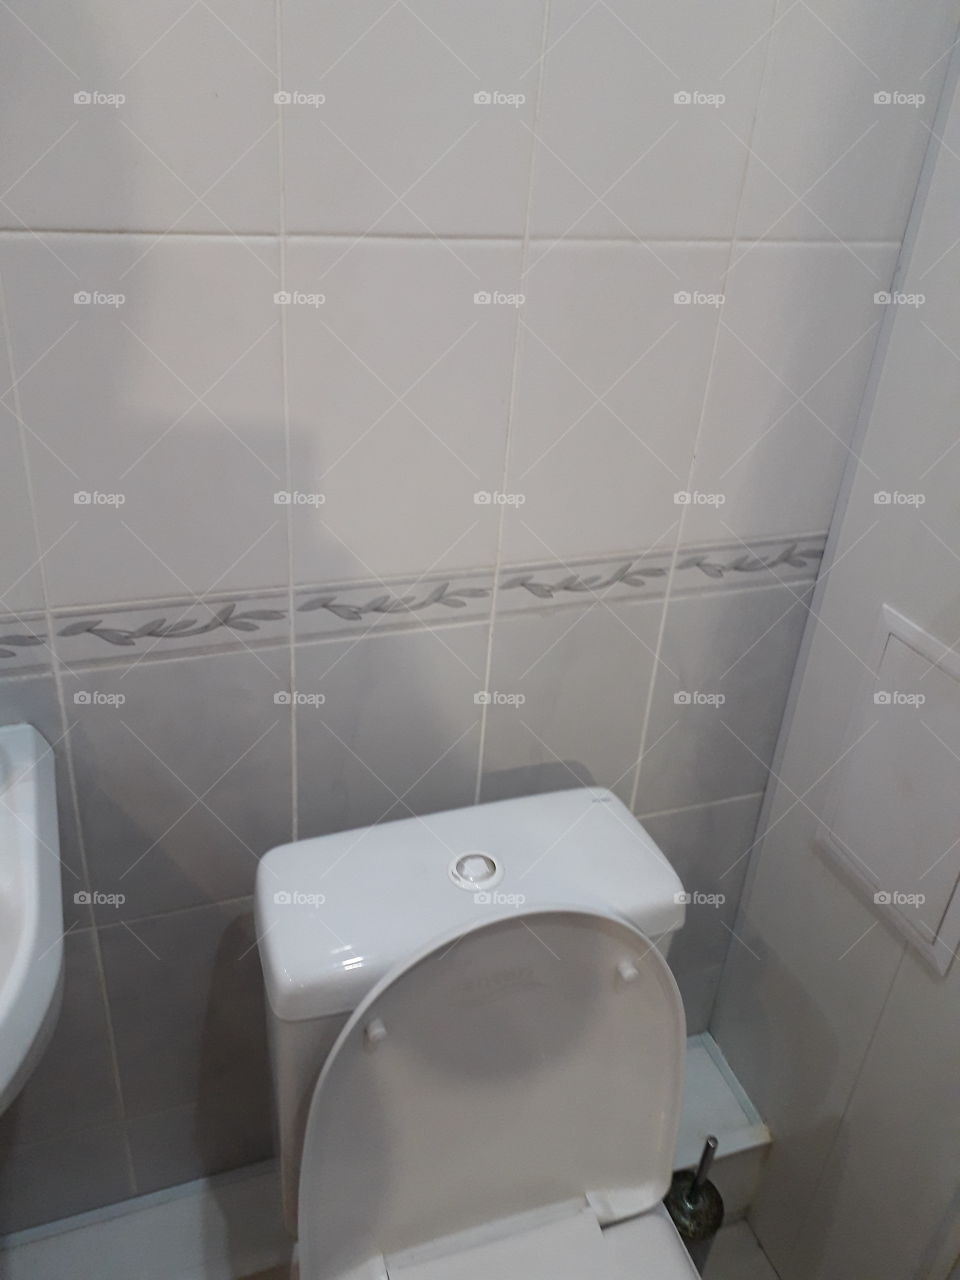 Bathroom, Washcloset, Inside, Contemporary, Lavatory